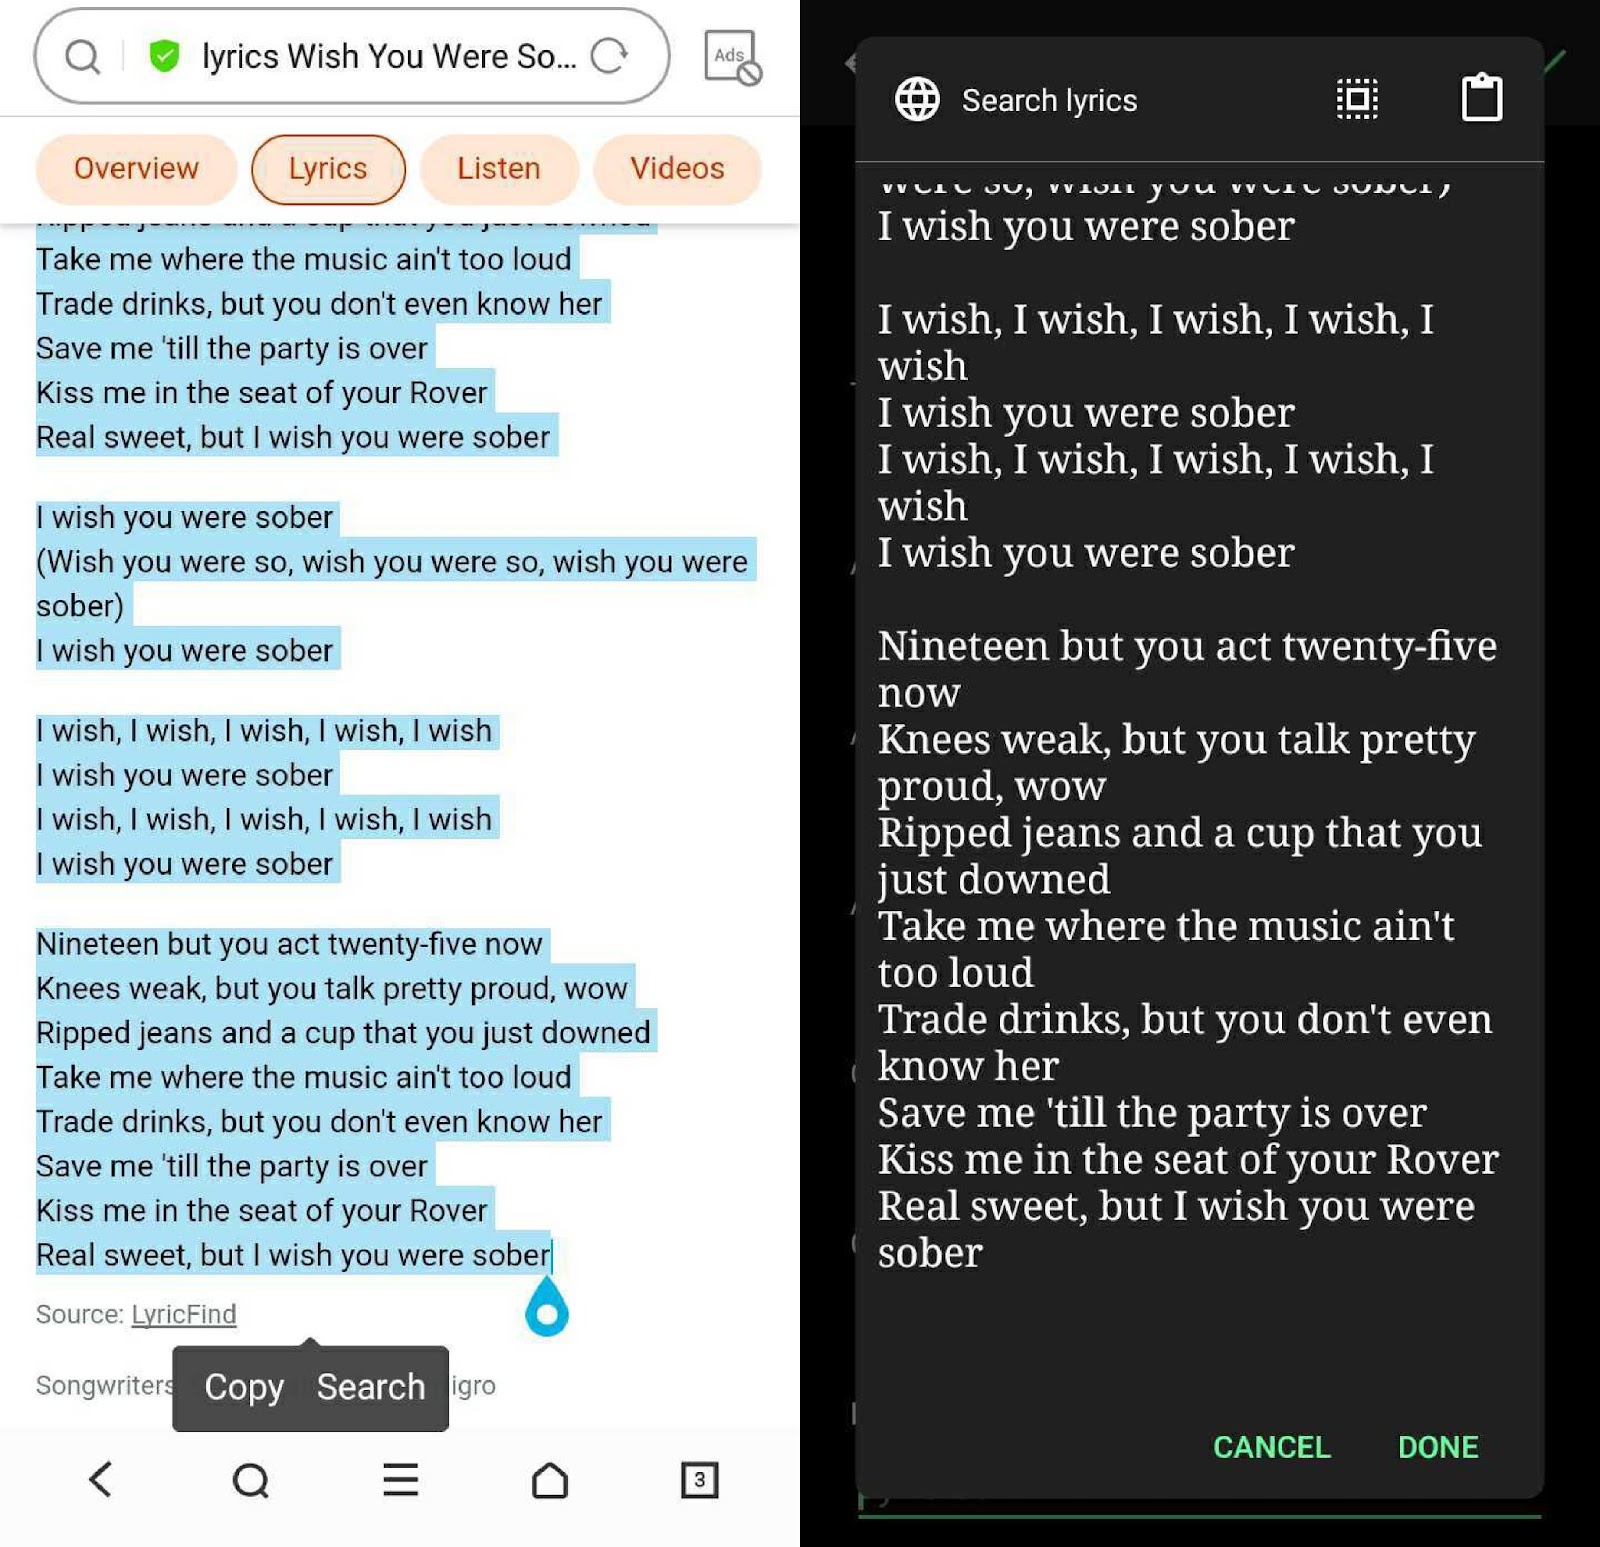 Copy the lyrics and paste them on the app